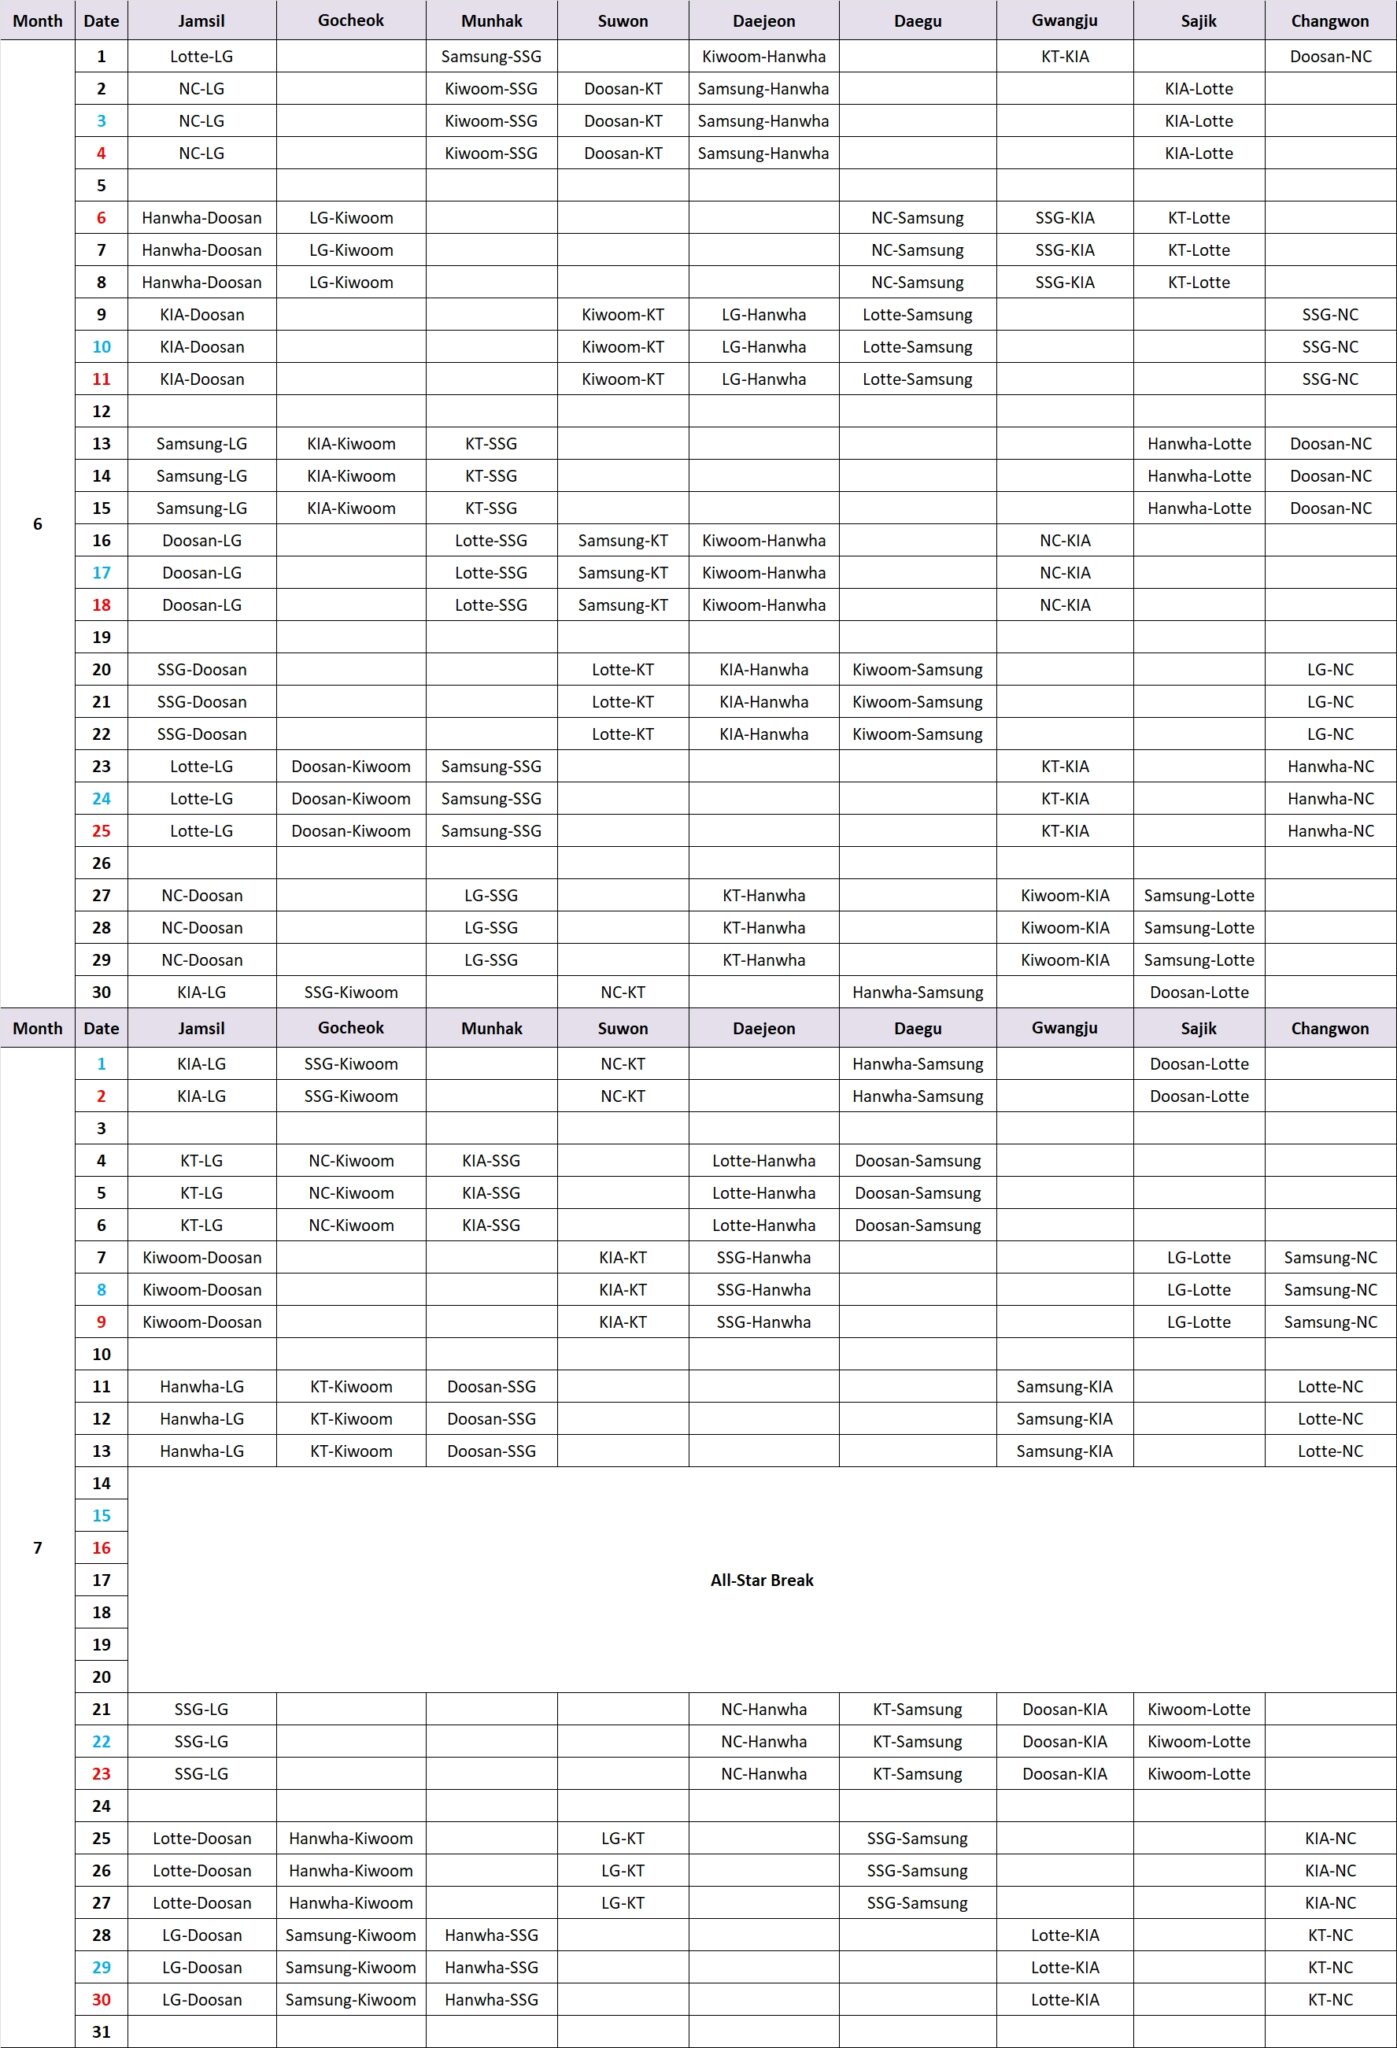 2023 KBO Schedule (click for full schedule) MyKBO